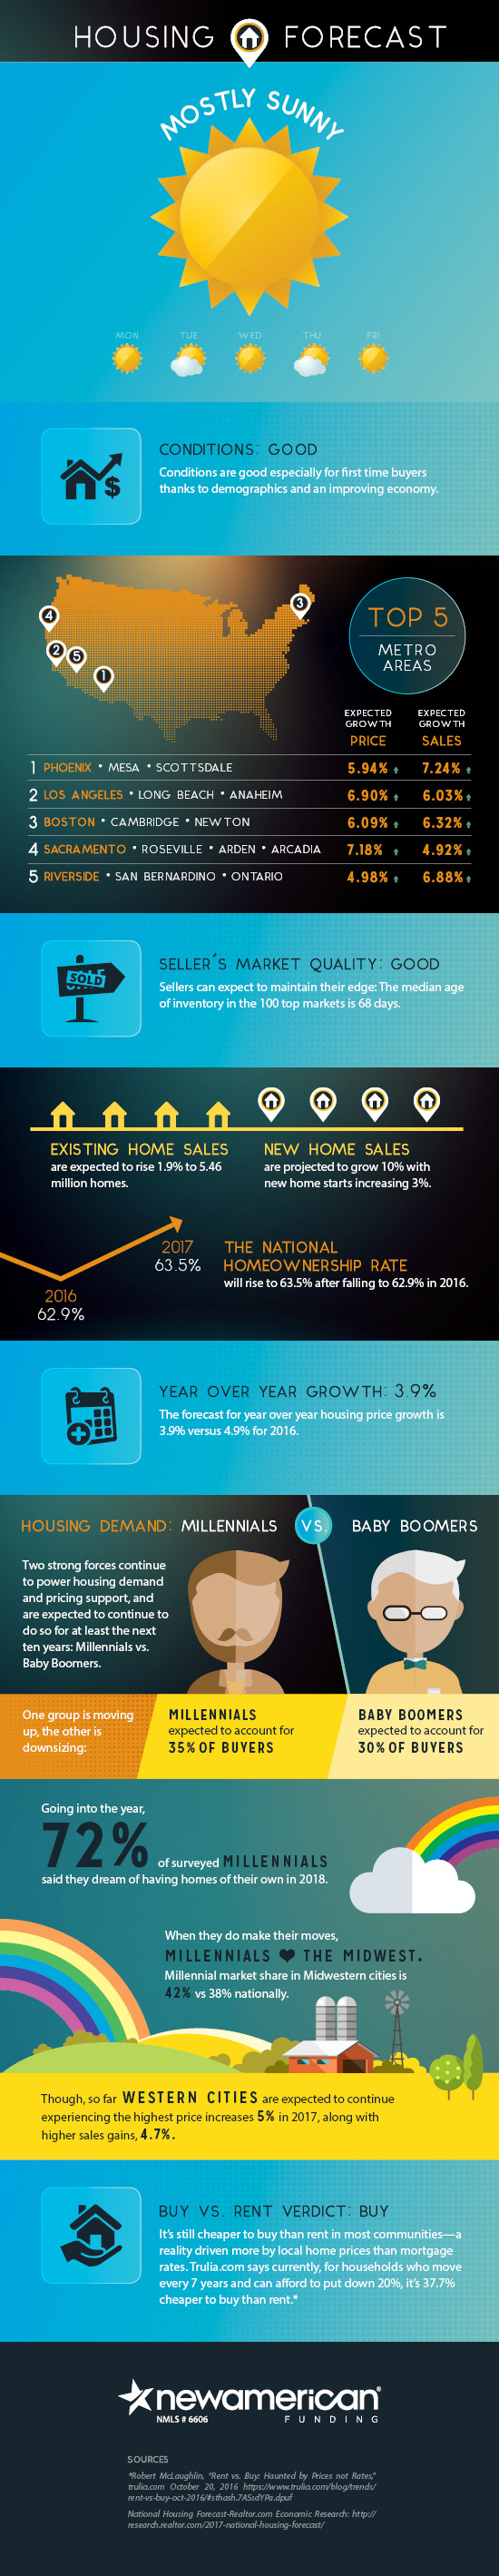 Housing Forecast 2017 - Infographic